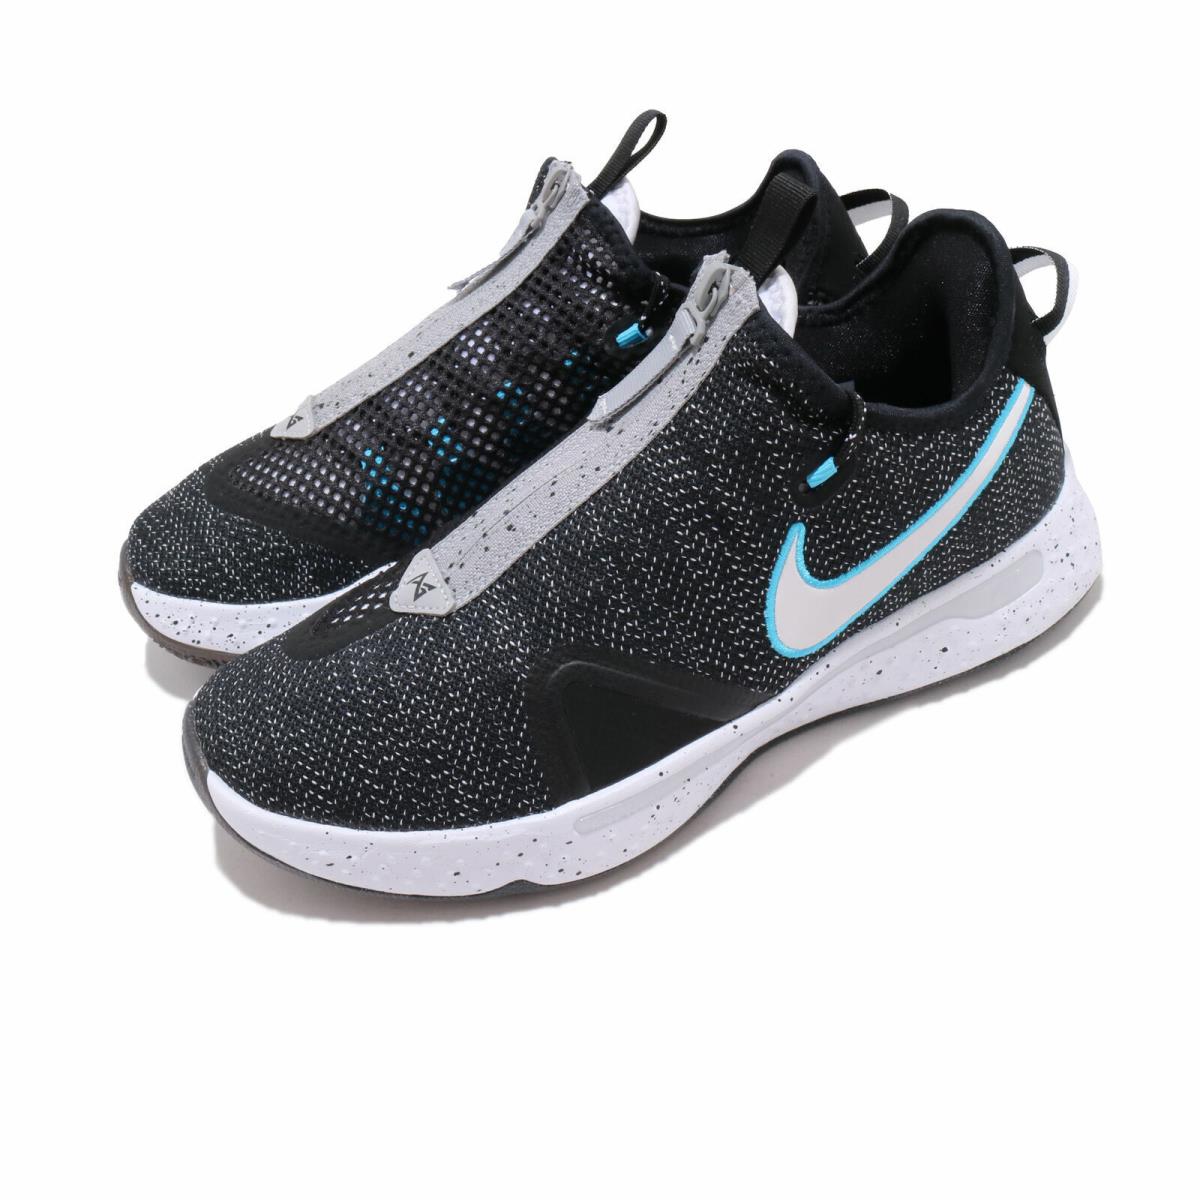 Nike PG 4 Pcg Black Teal White CZ2240-200 PG4 Men`s SZ 10 Basketball Shoes